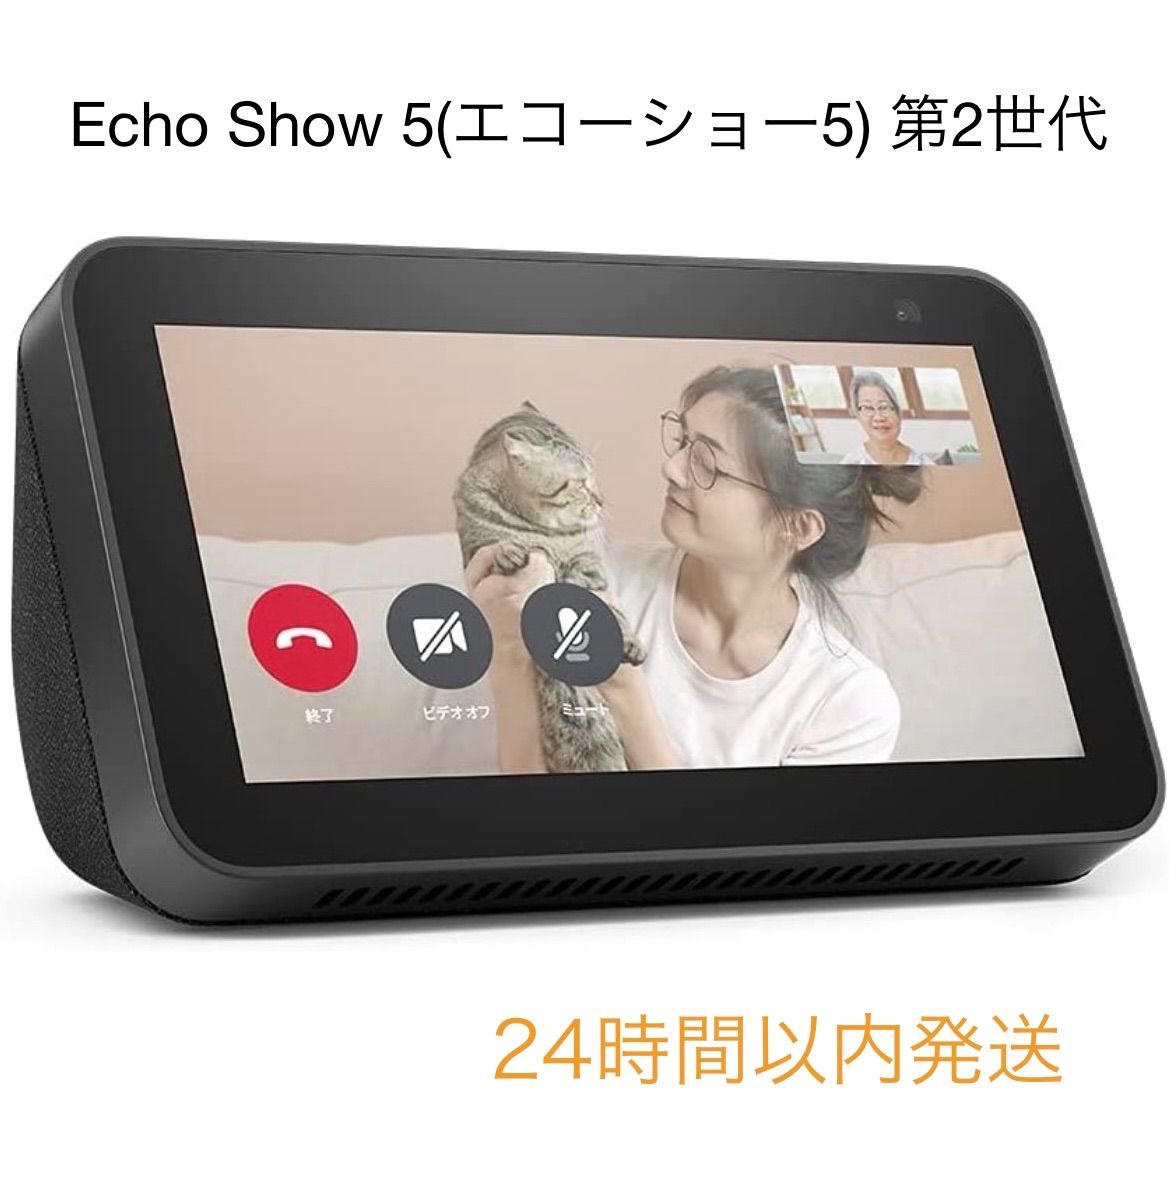 Echo Show (エコーショー5) 第2世代